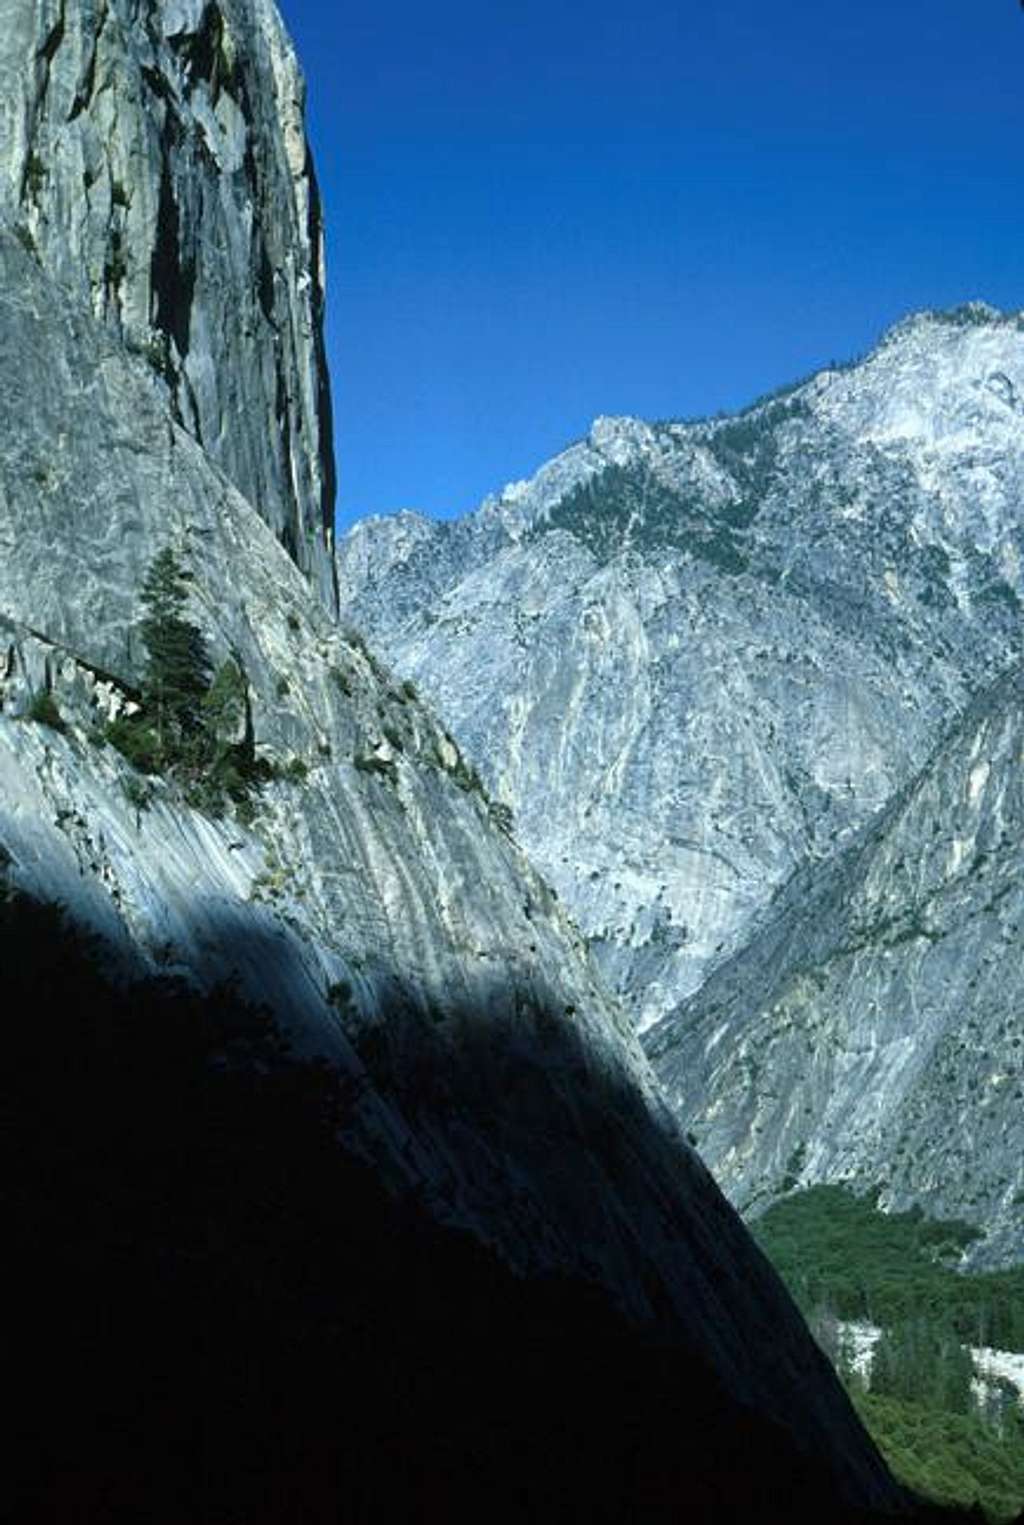 Another Yosemite